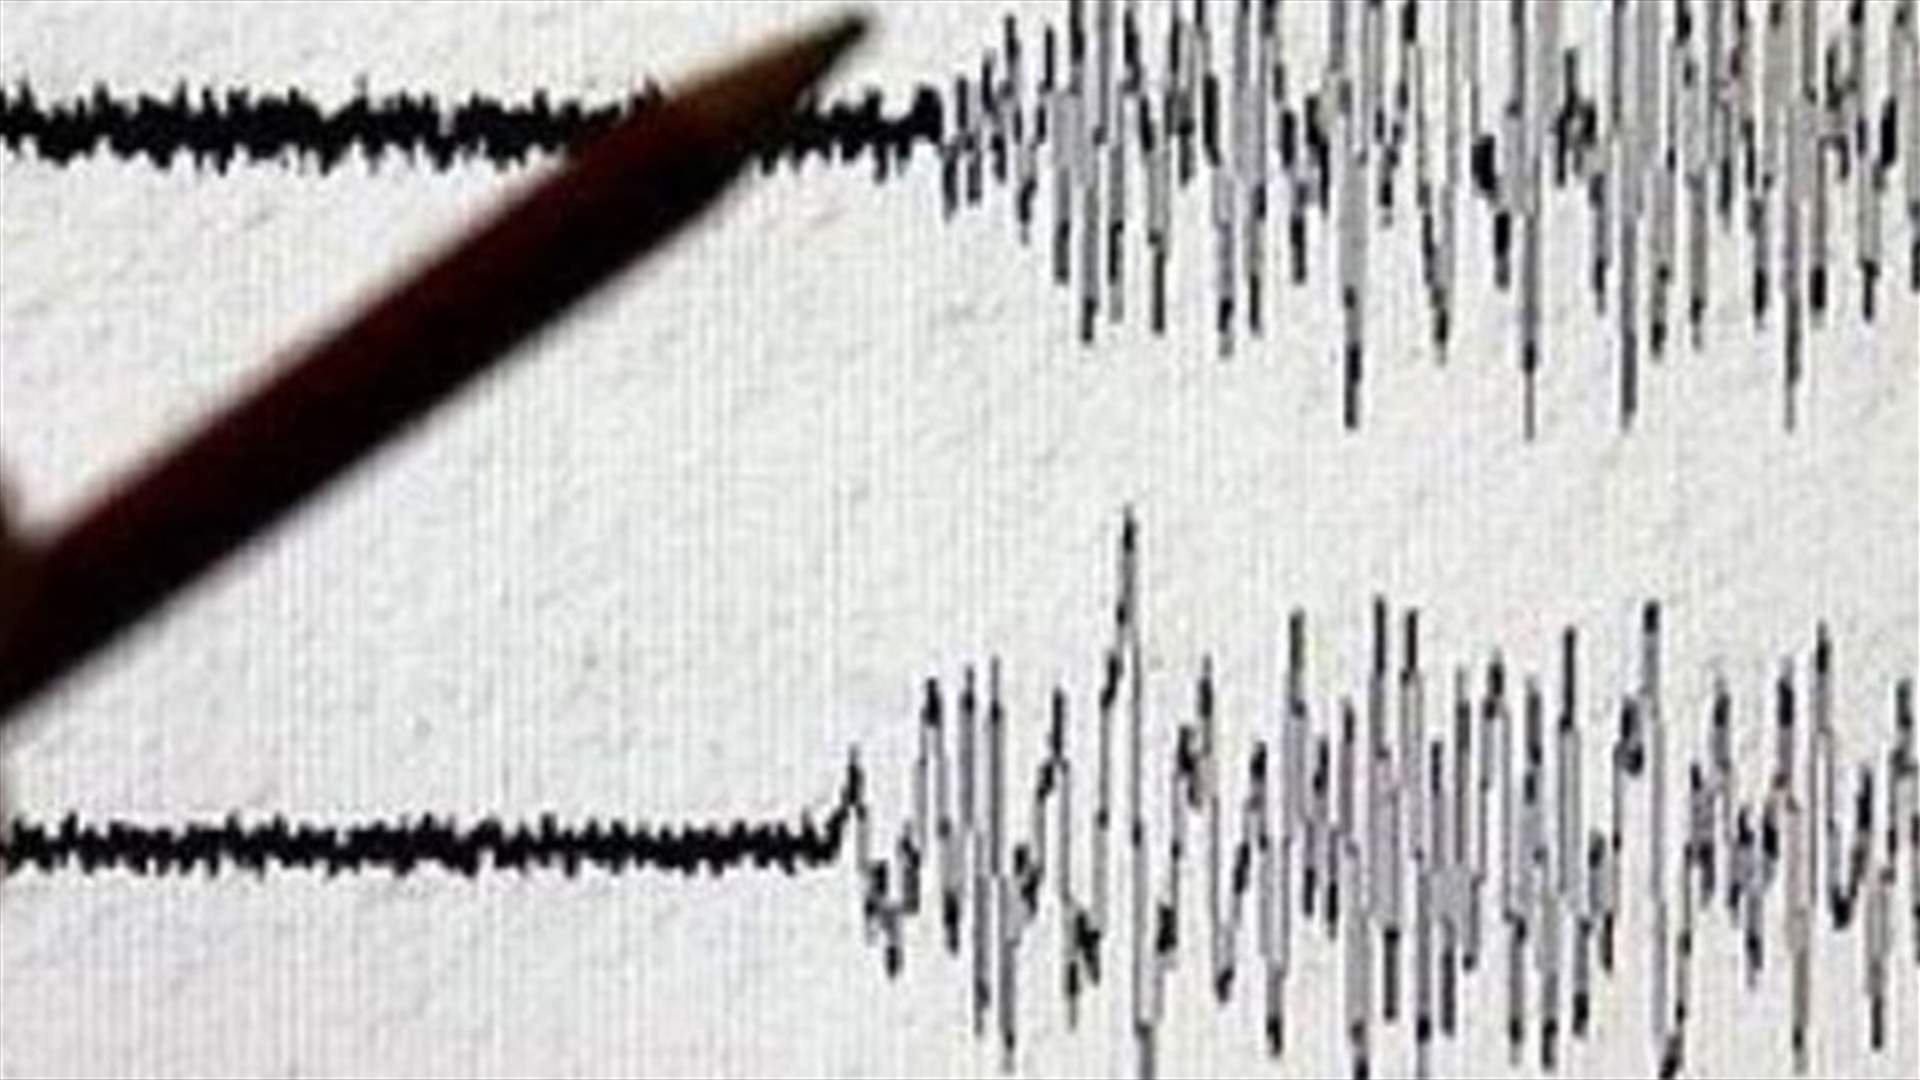  زلزال جنوب غربي فيجي